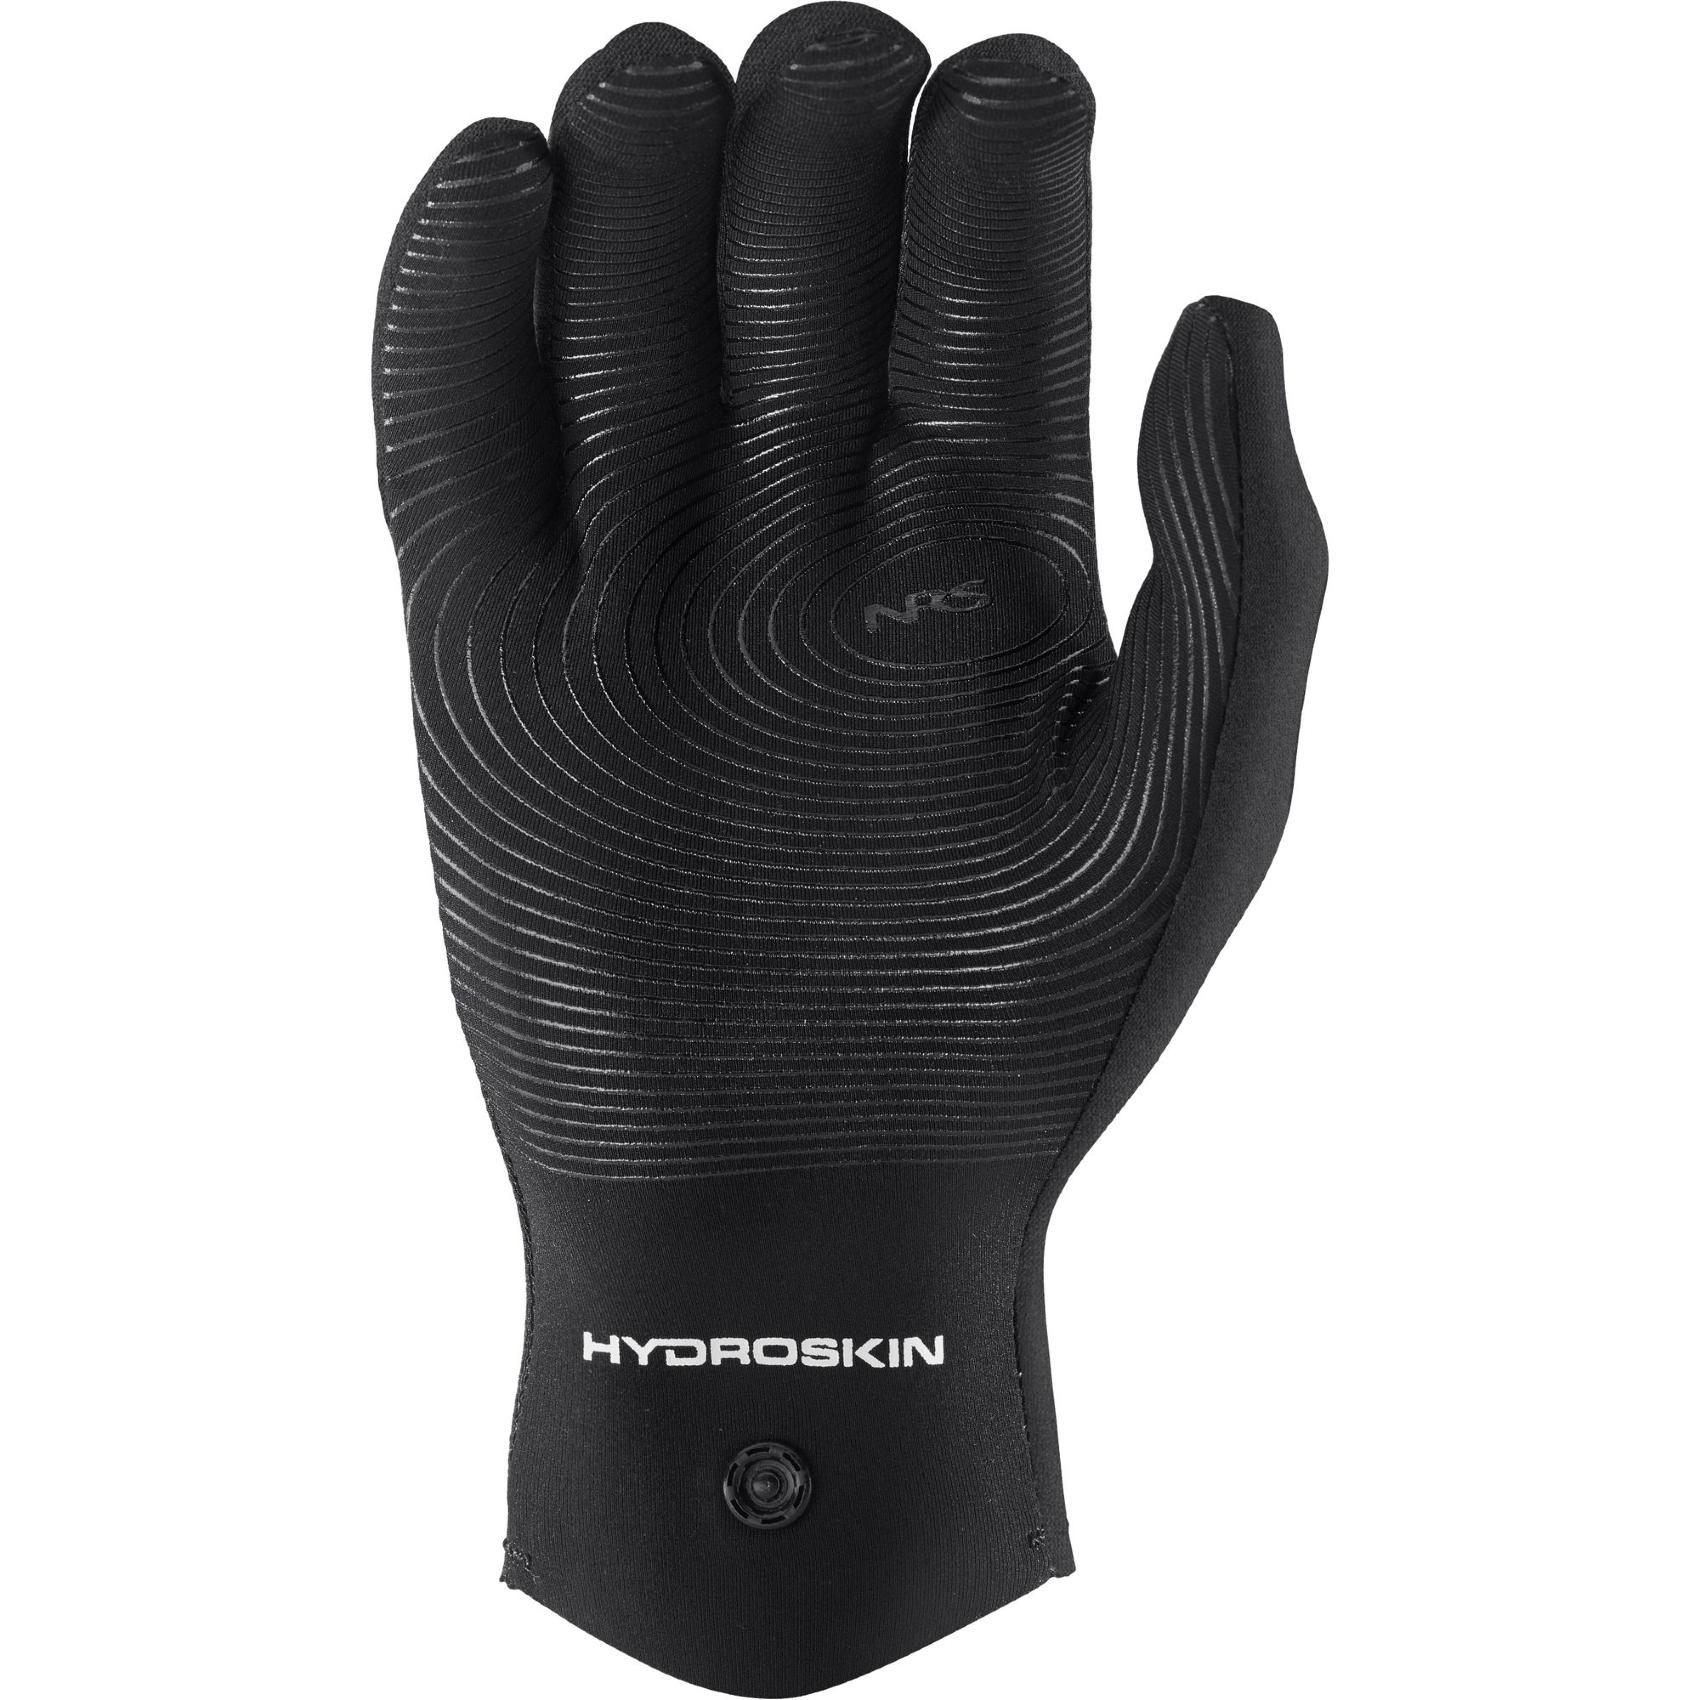 NRS HydroSkin Handschuhe, Herren